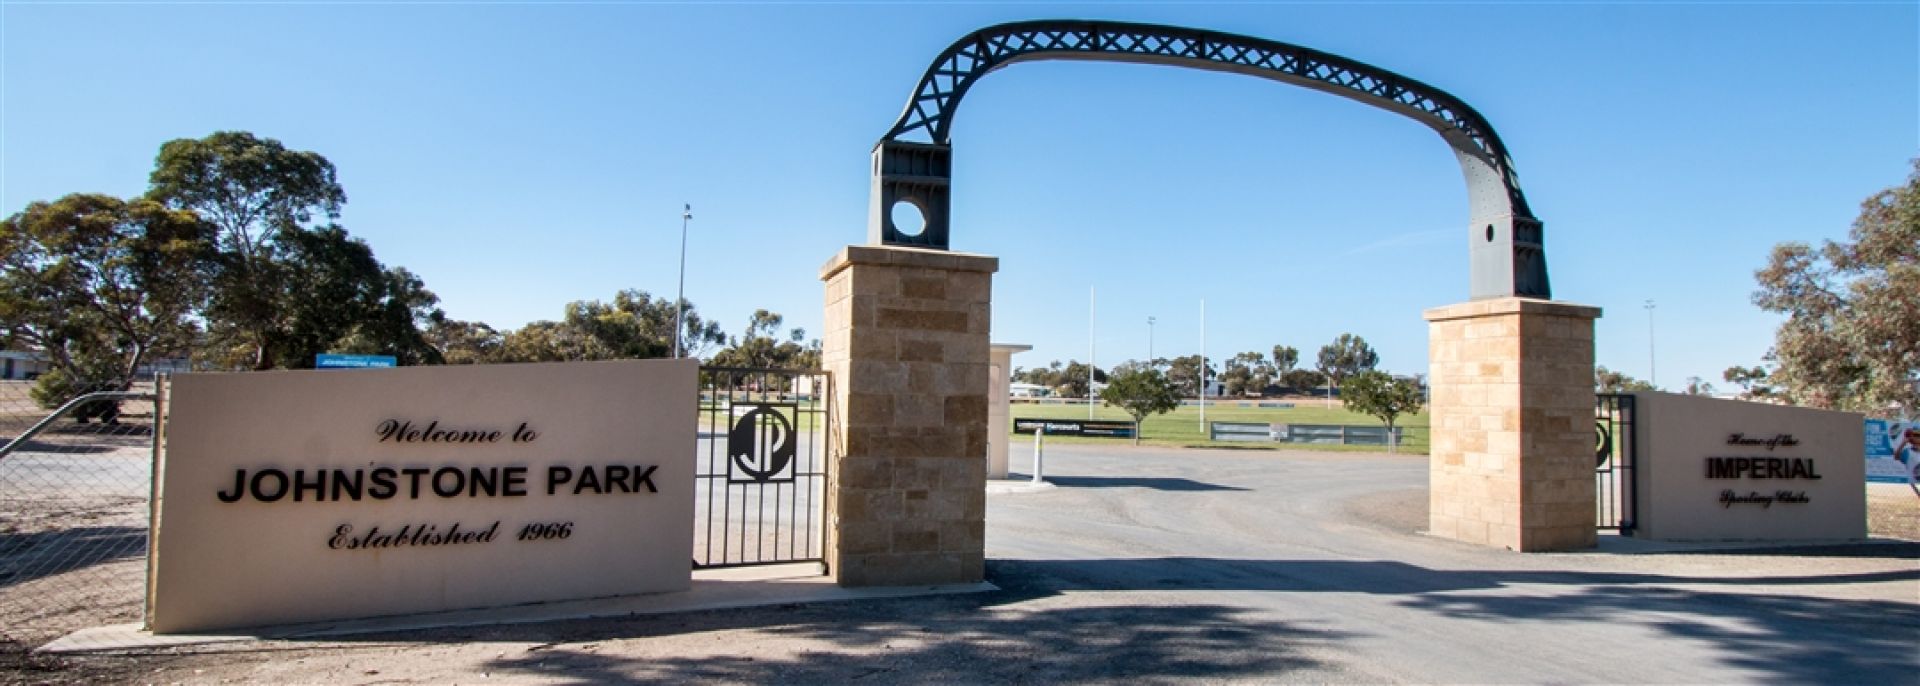 Johnstone Park Entrance